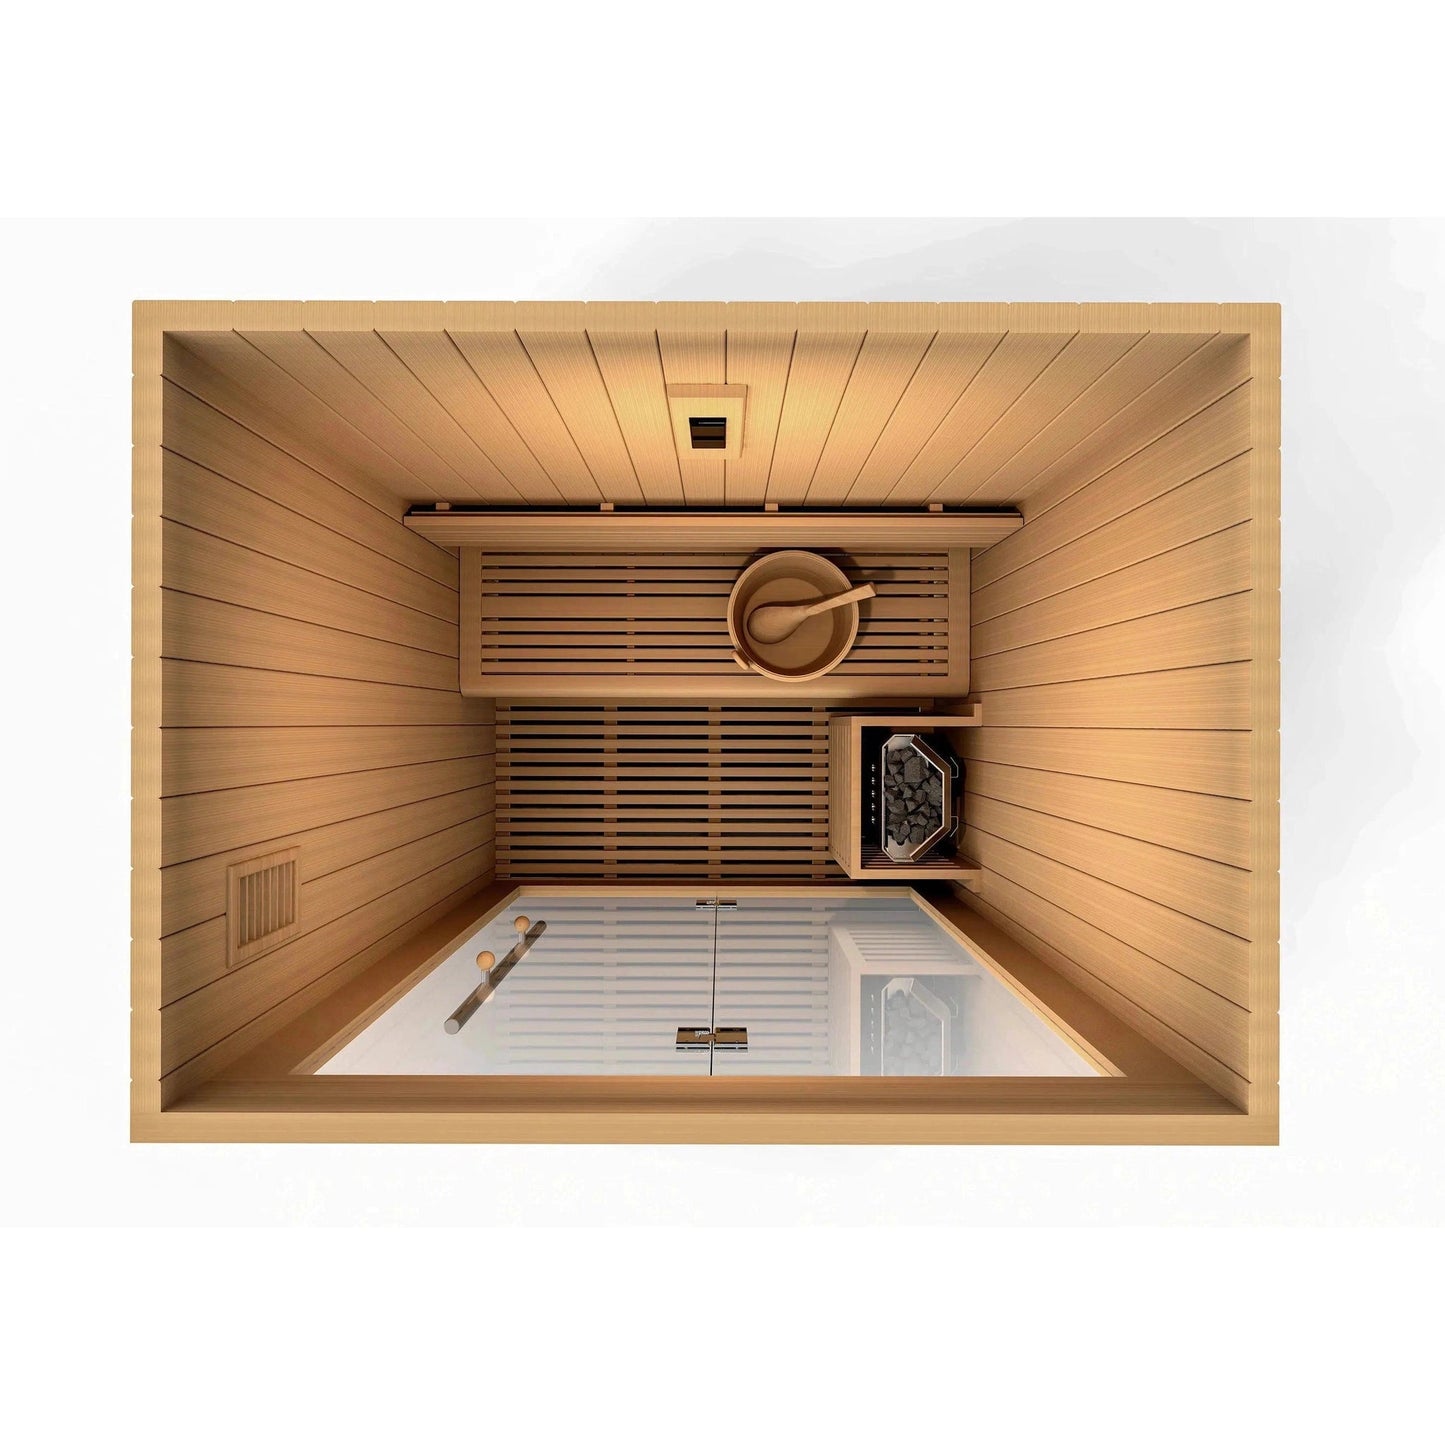 Golden Designs Sundsvall Edition 2-Person Traditional Steam Sauna in Canadian Red Cedar